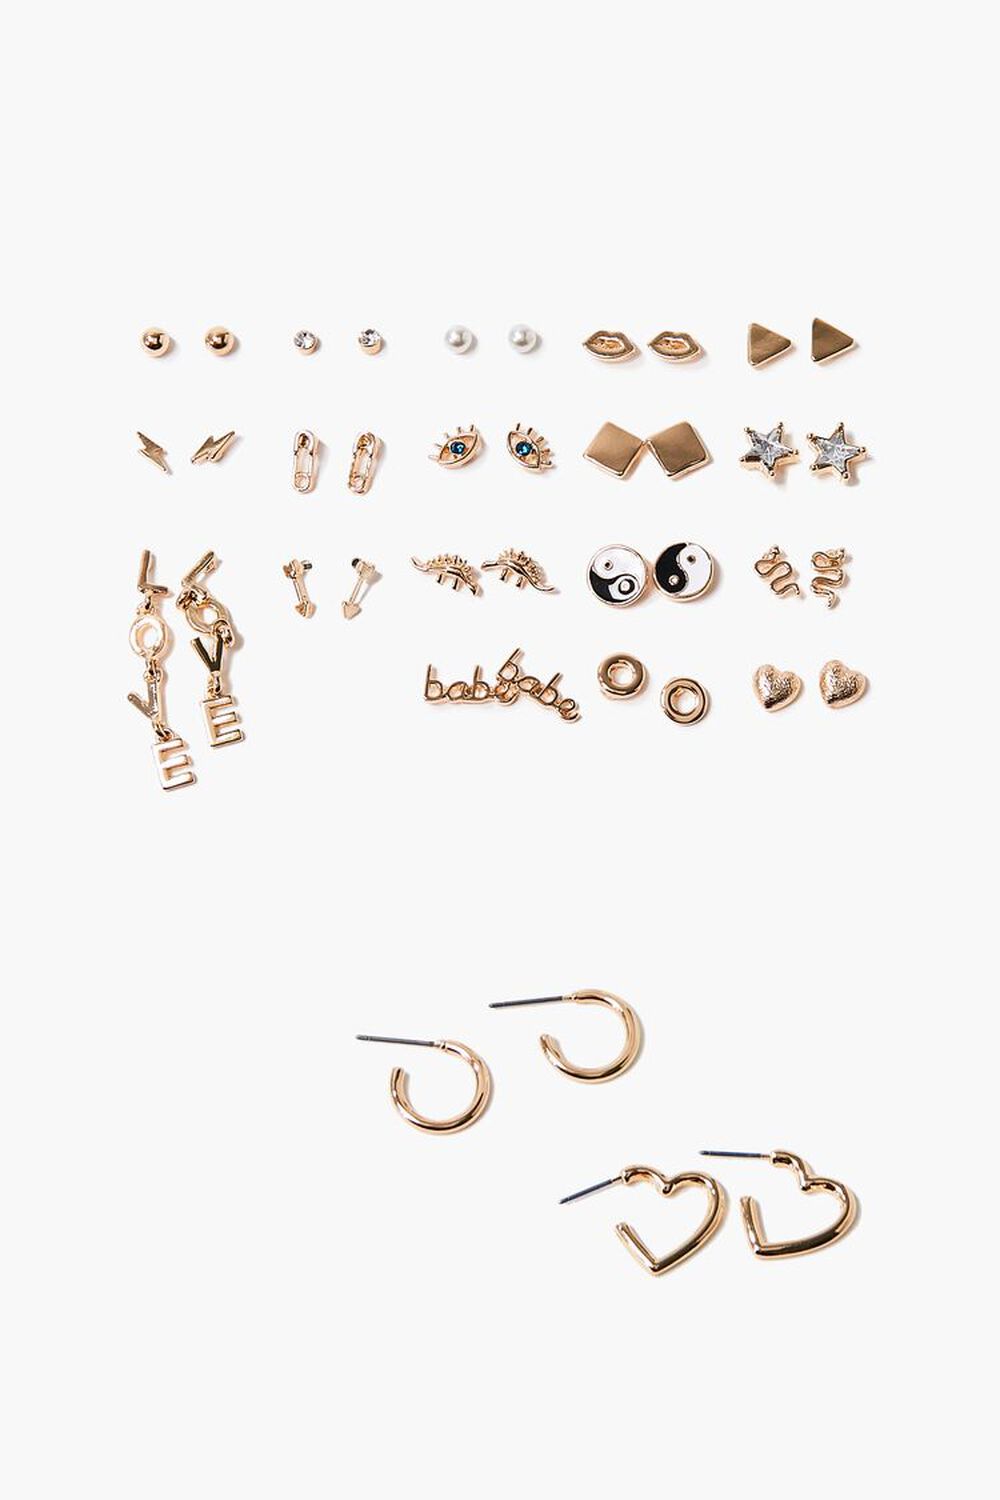 GOLD/CLEAR Rhinestone Variety Earrings Set, image 1